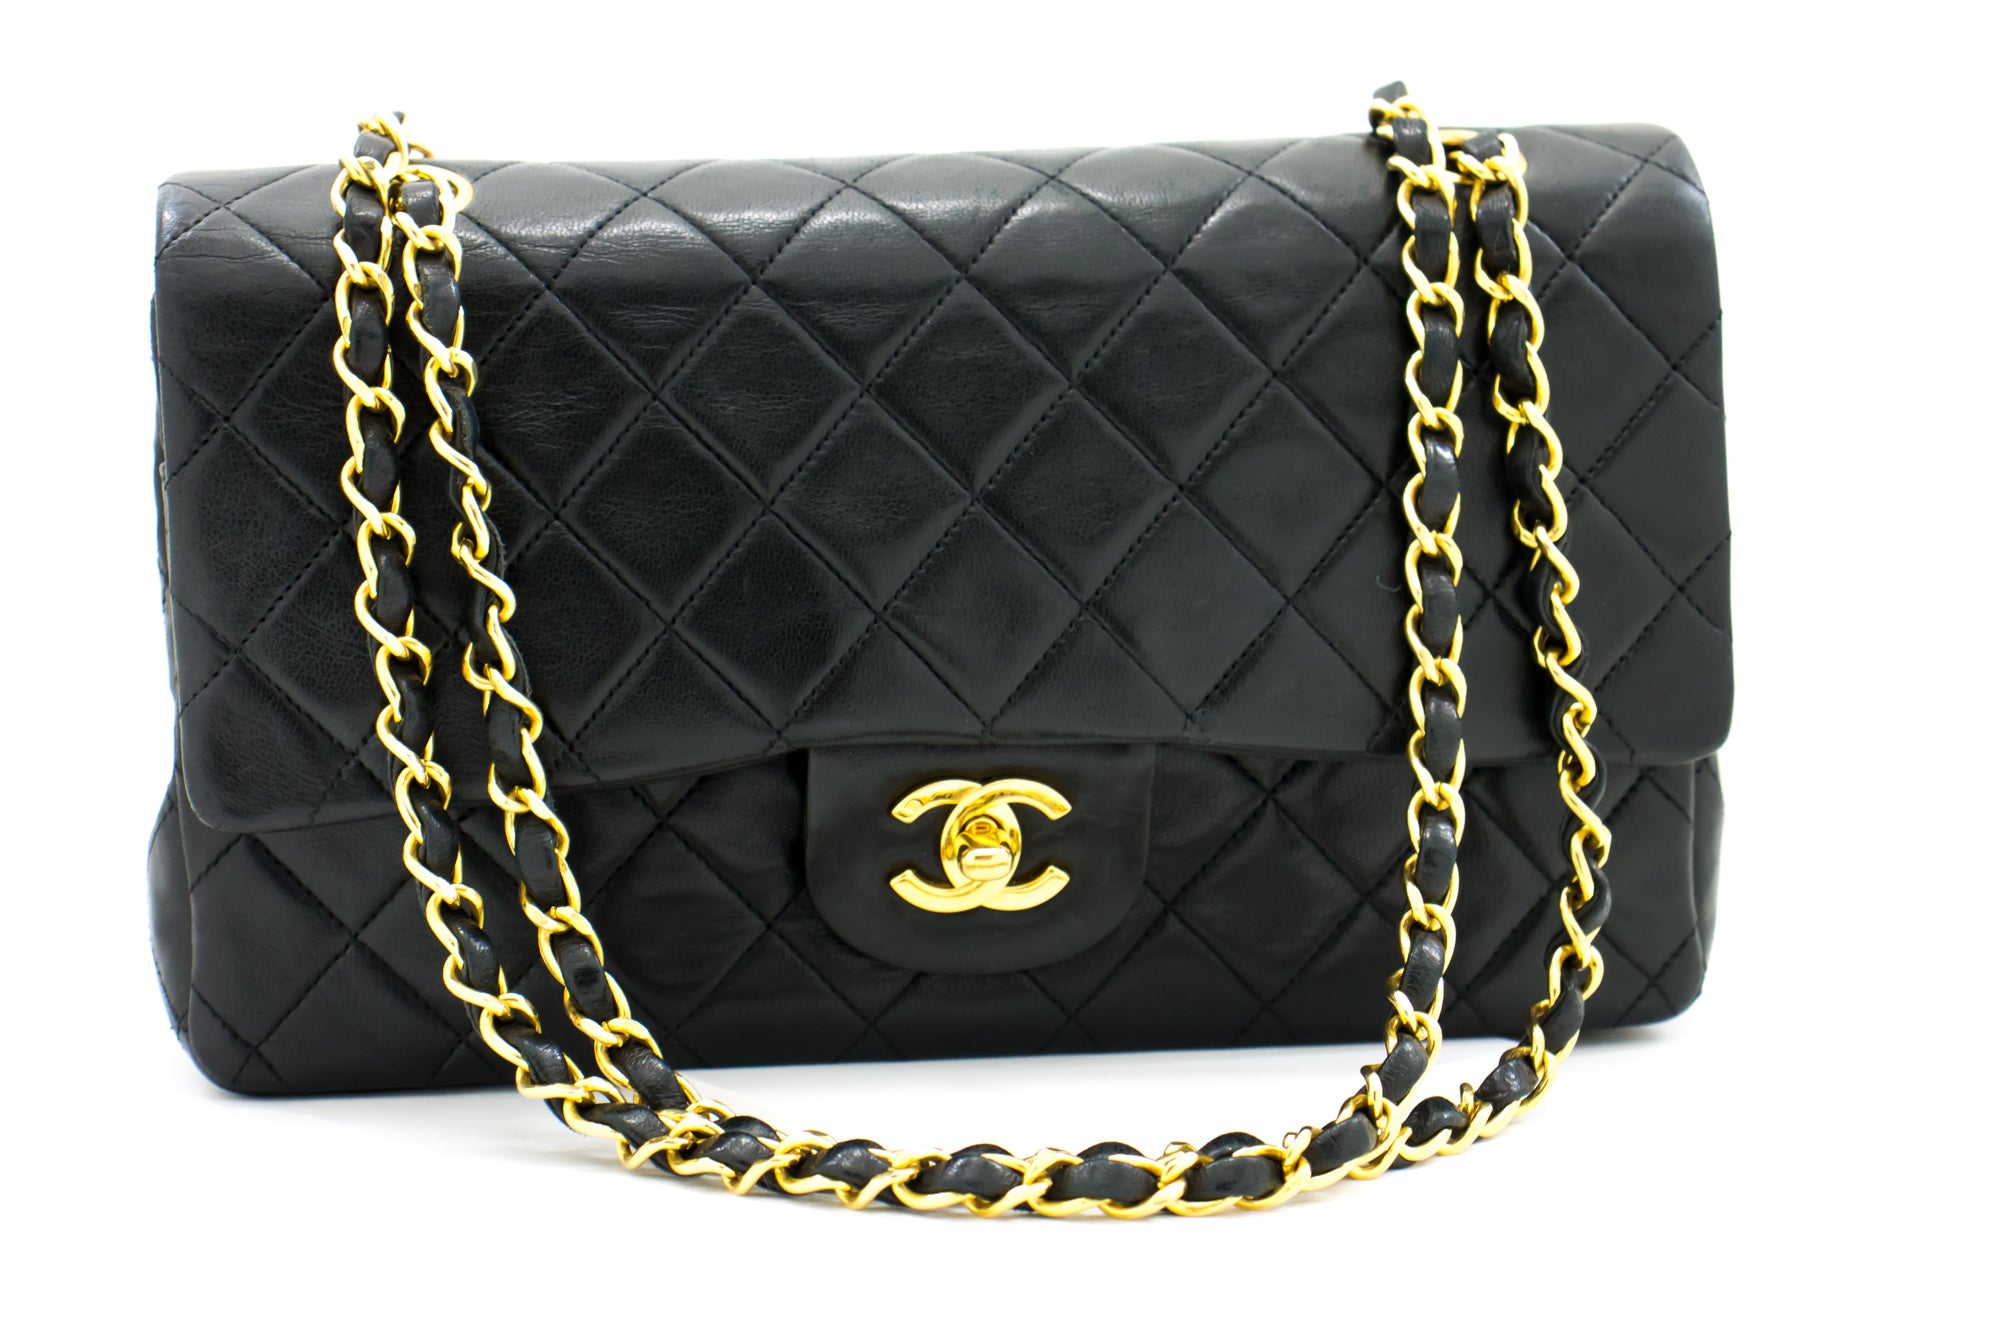 Chanel Classic Double Flap 10 Chain Shoulder Bag Black Lambskin i71